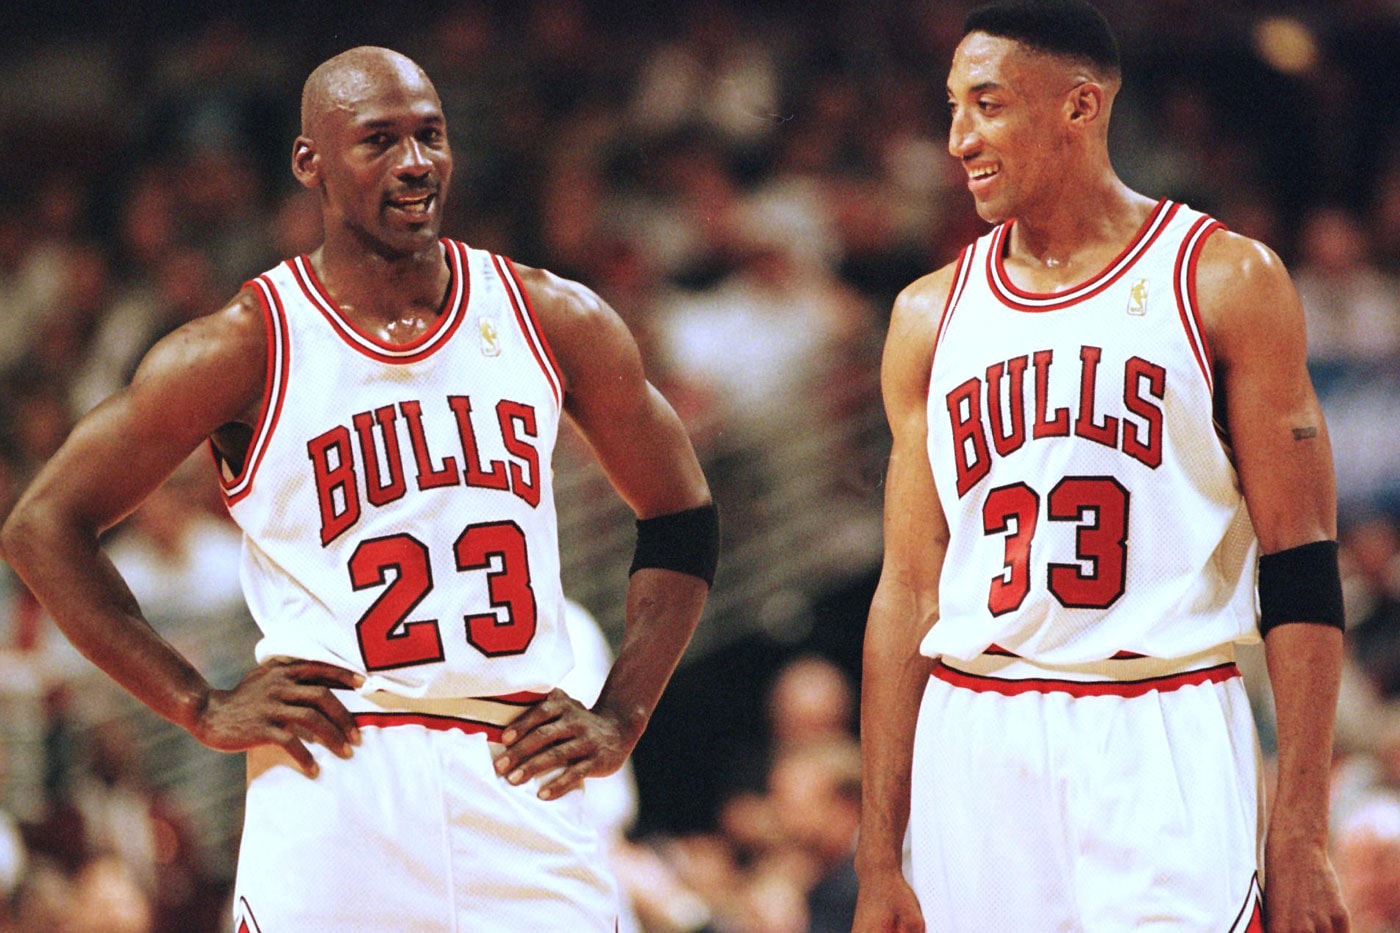 Scottie Pippen Has Once Again Taken Another Shot at Michael Jordan Over His "Flu Game" nba chicago bulls basketball teammates utah jazz 1997 nba finals 1998